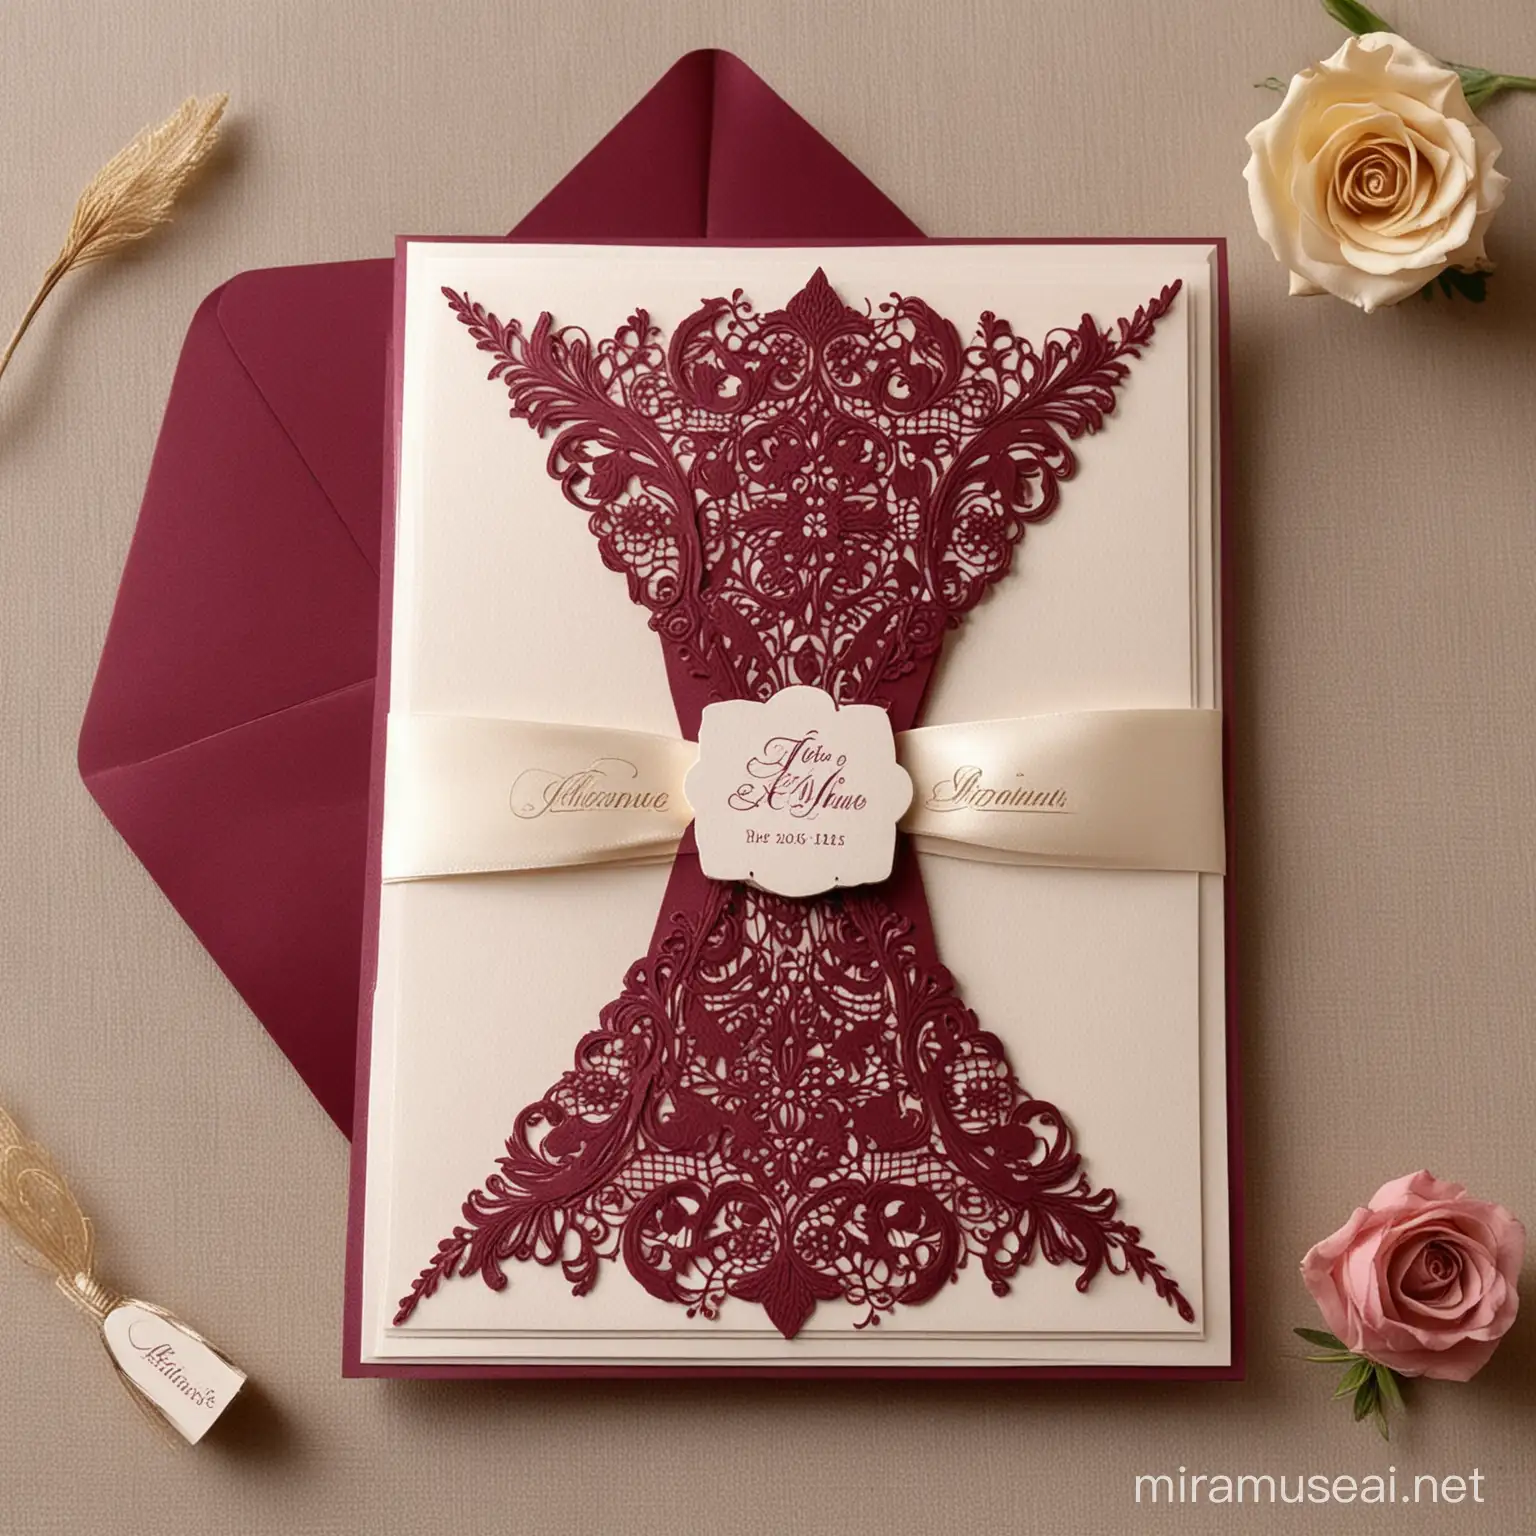 Elegant Burgundy and Champagne Wedding Invitation Design